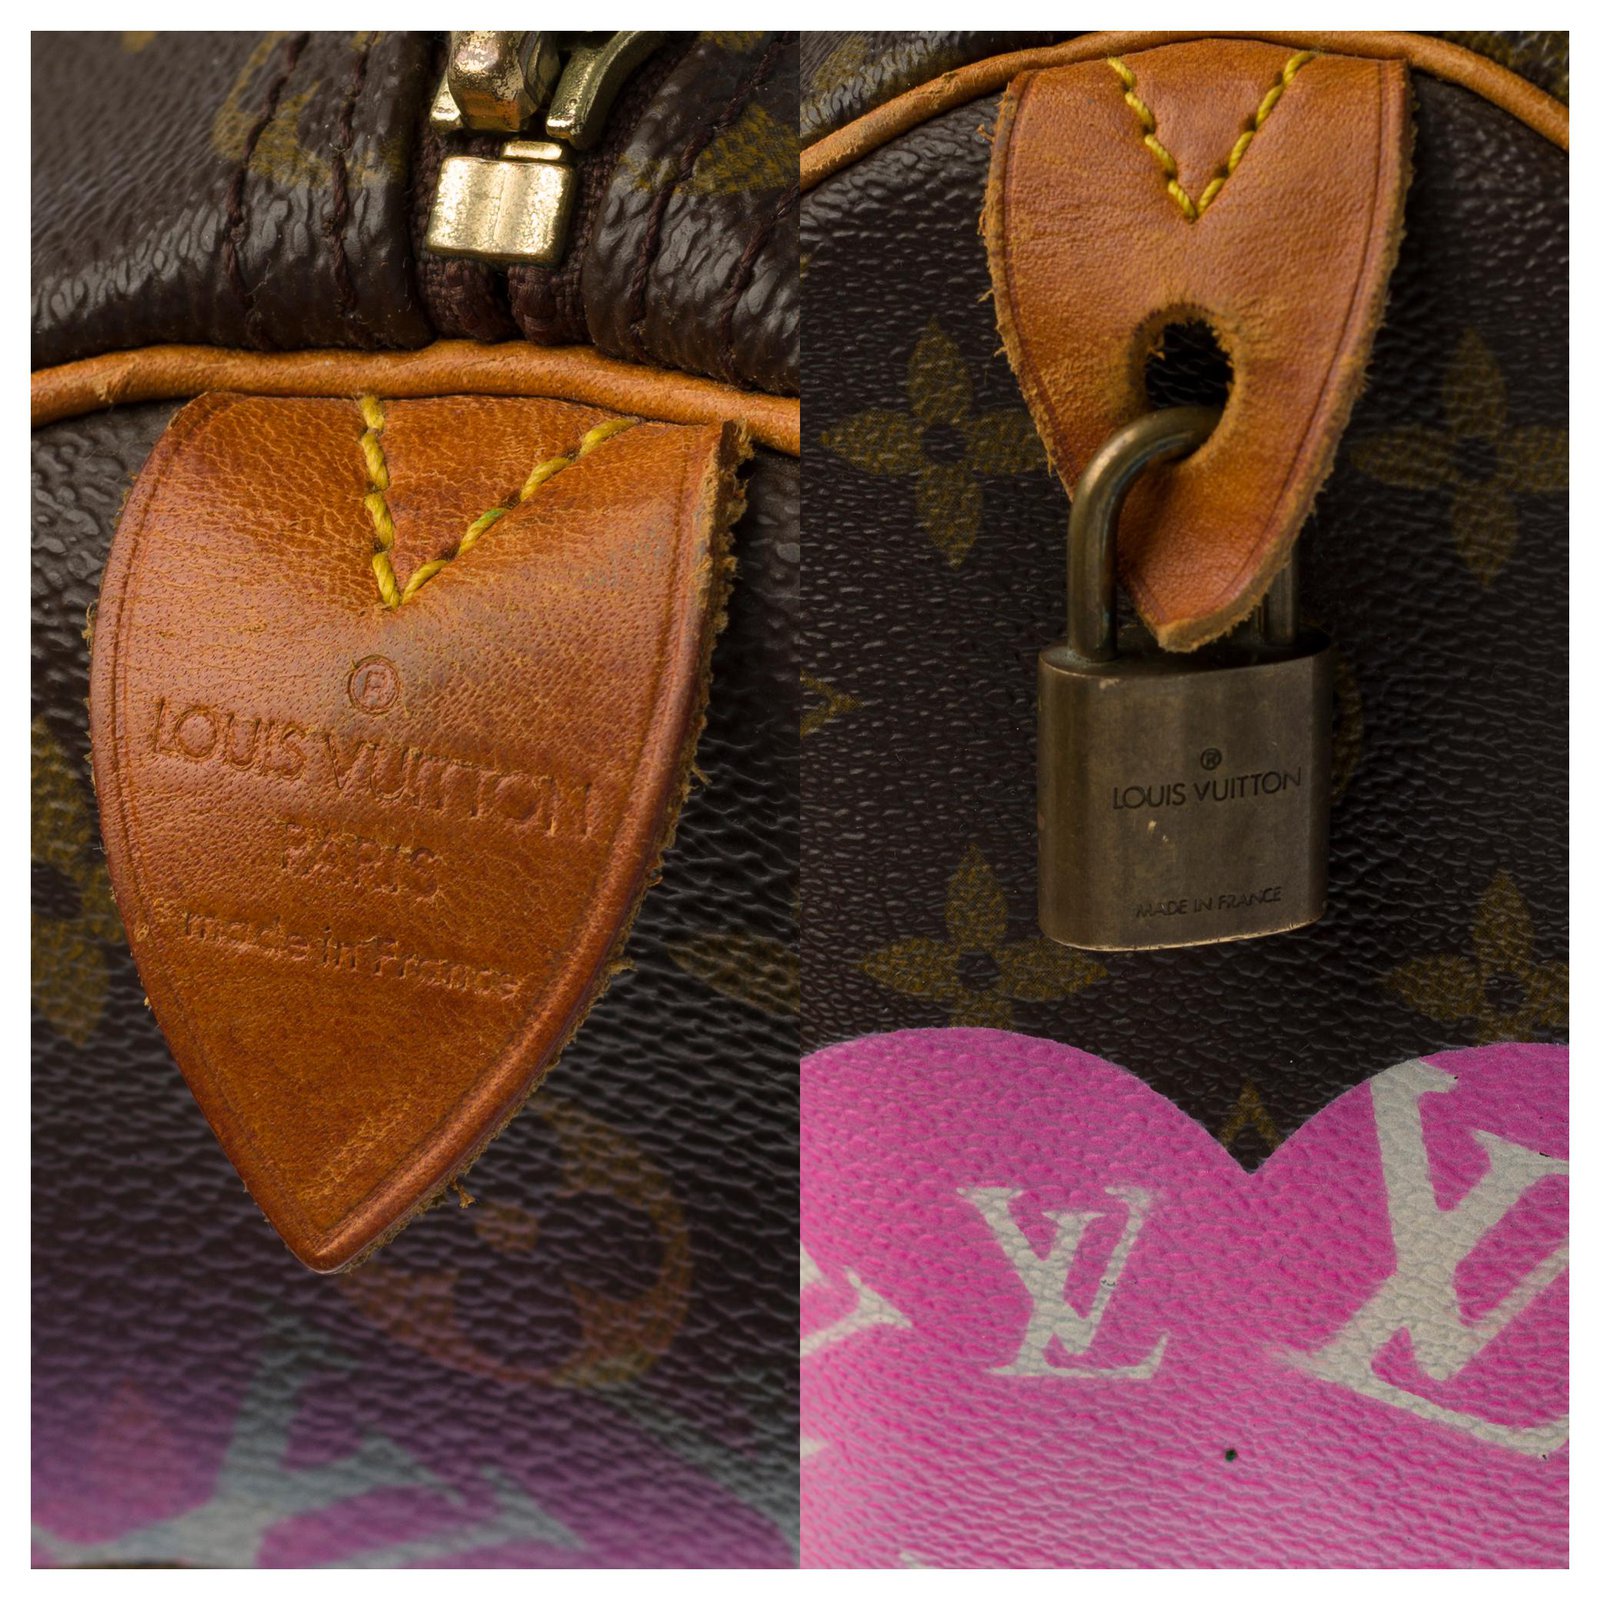 LOUIS VUITTON M41989 Monogram Bay Speedy30 Duffle Bag Hand Bag